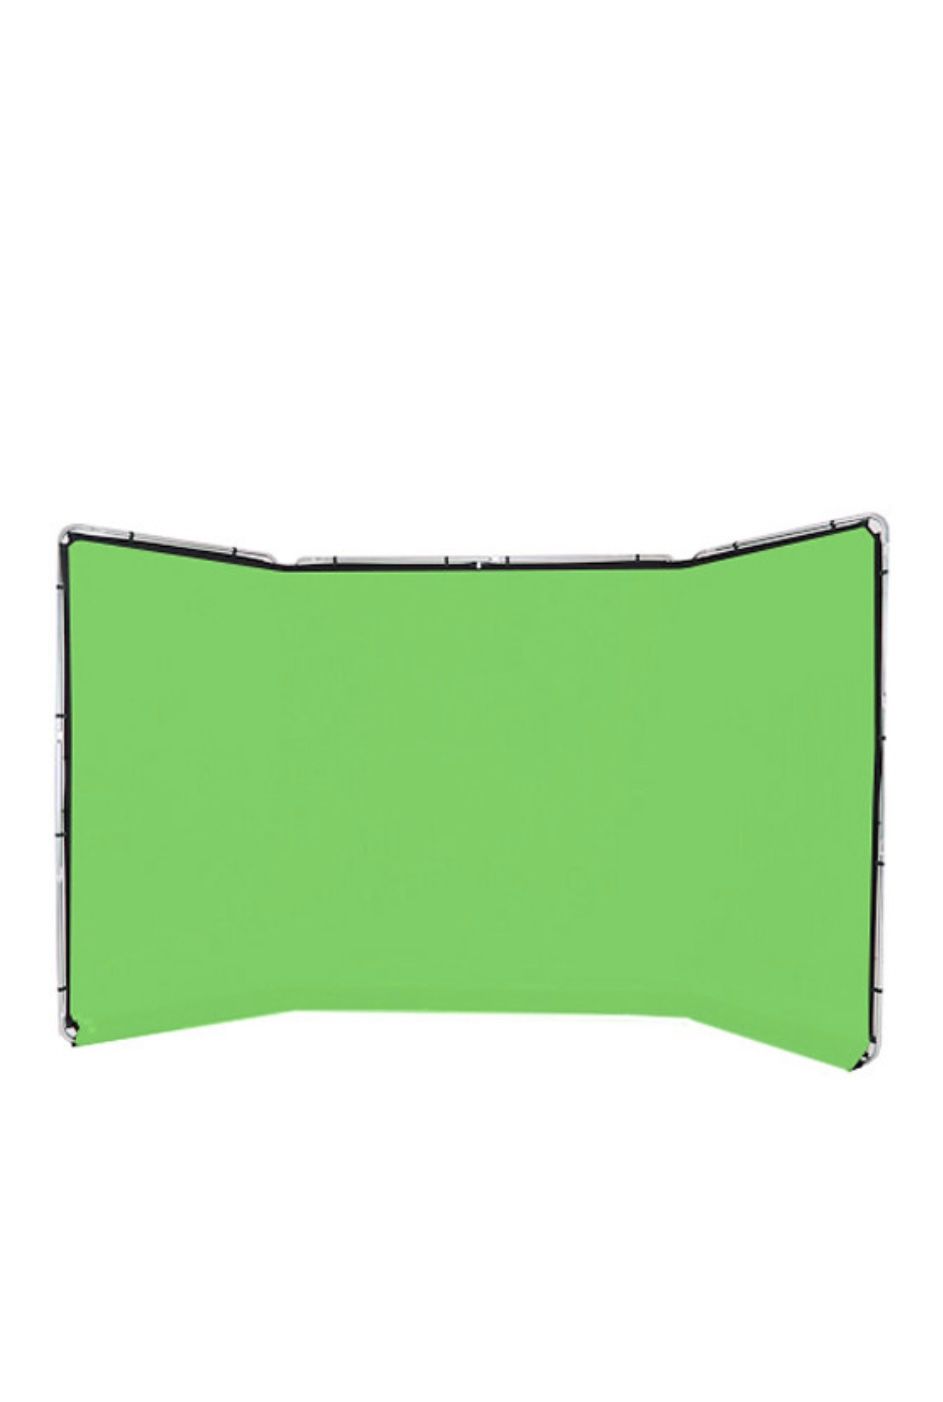 Chromakey green Screen 